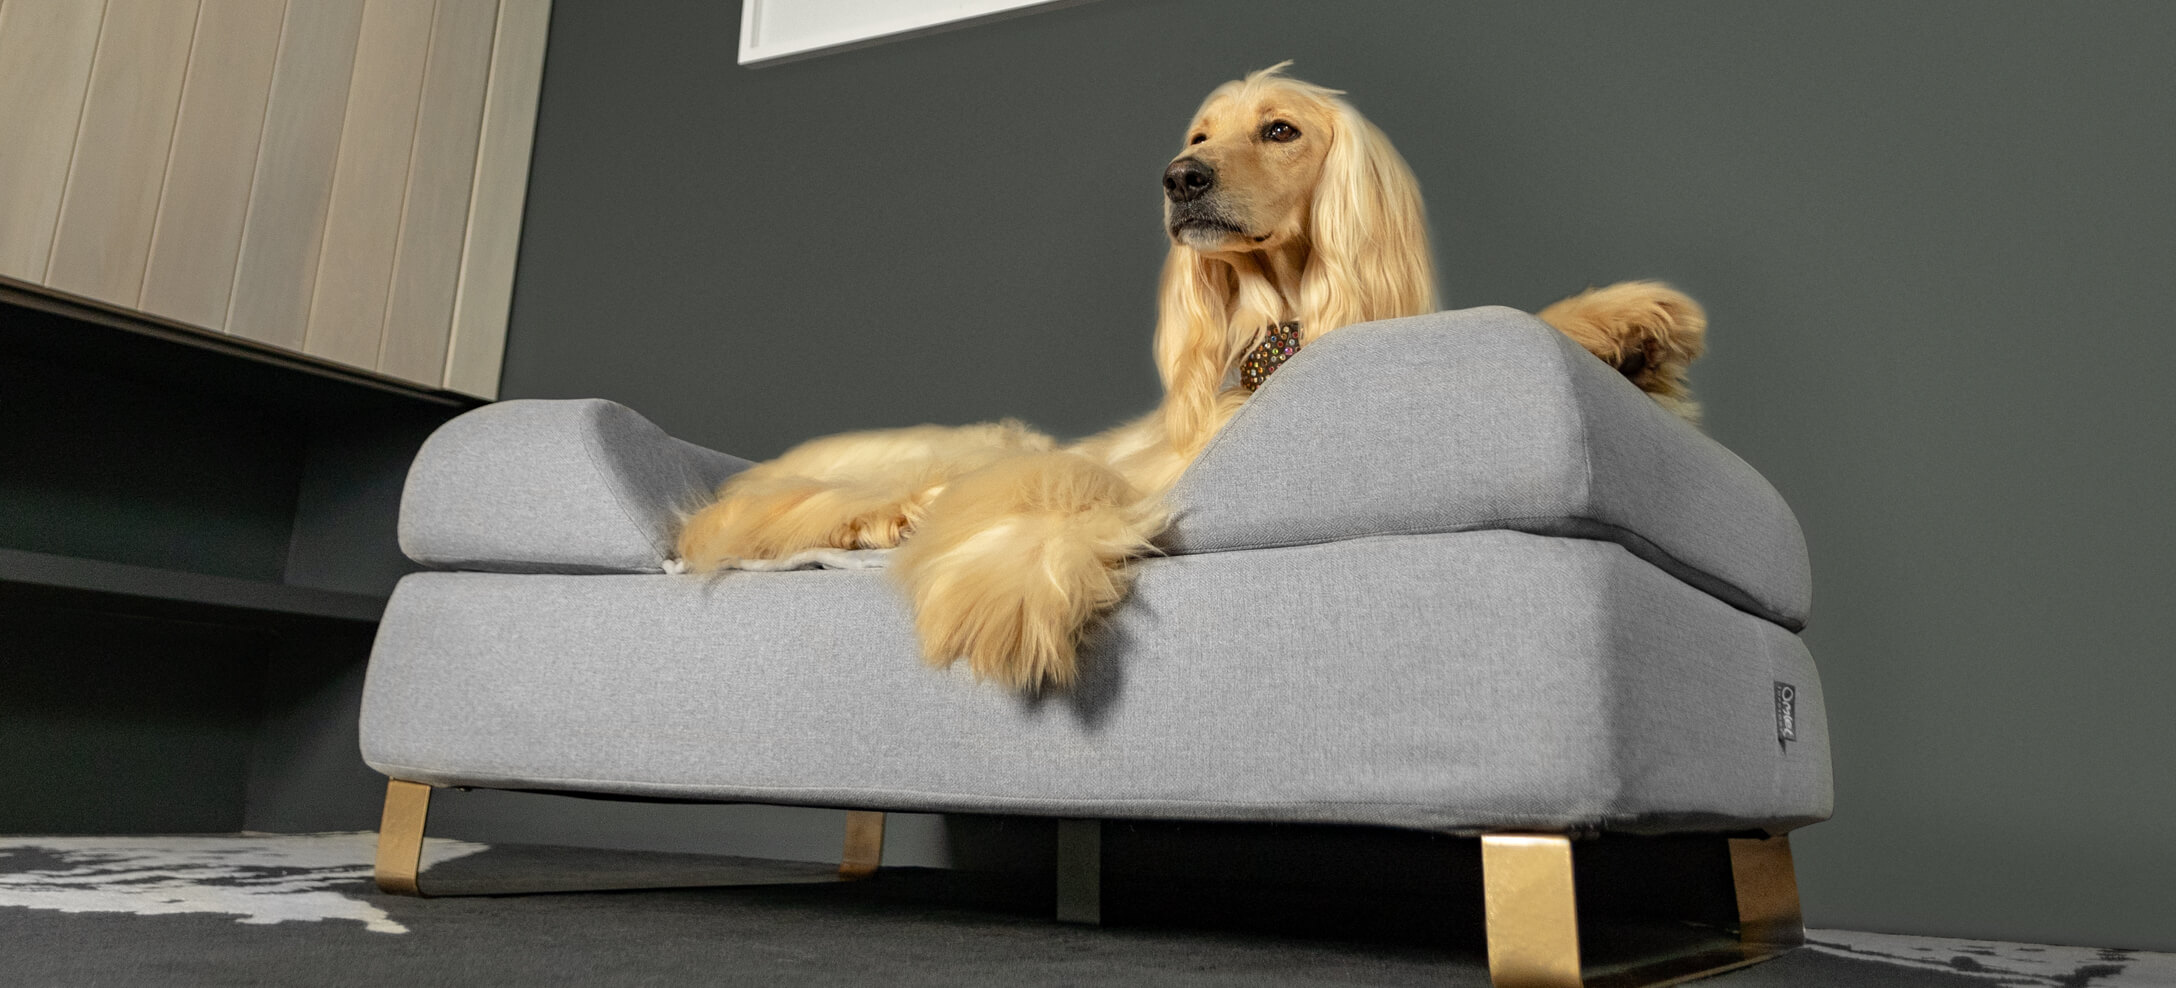 Afghan hound on Omlet's Topology dog bed